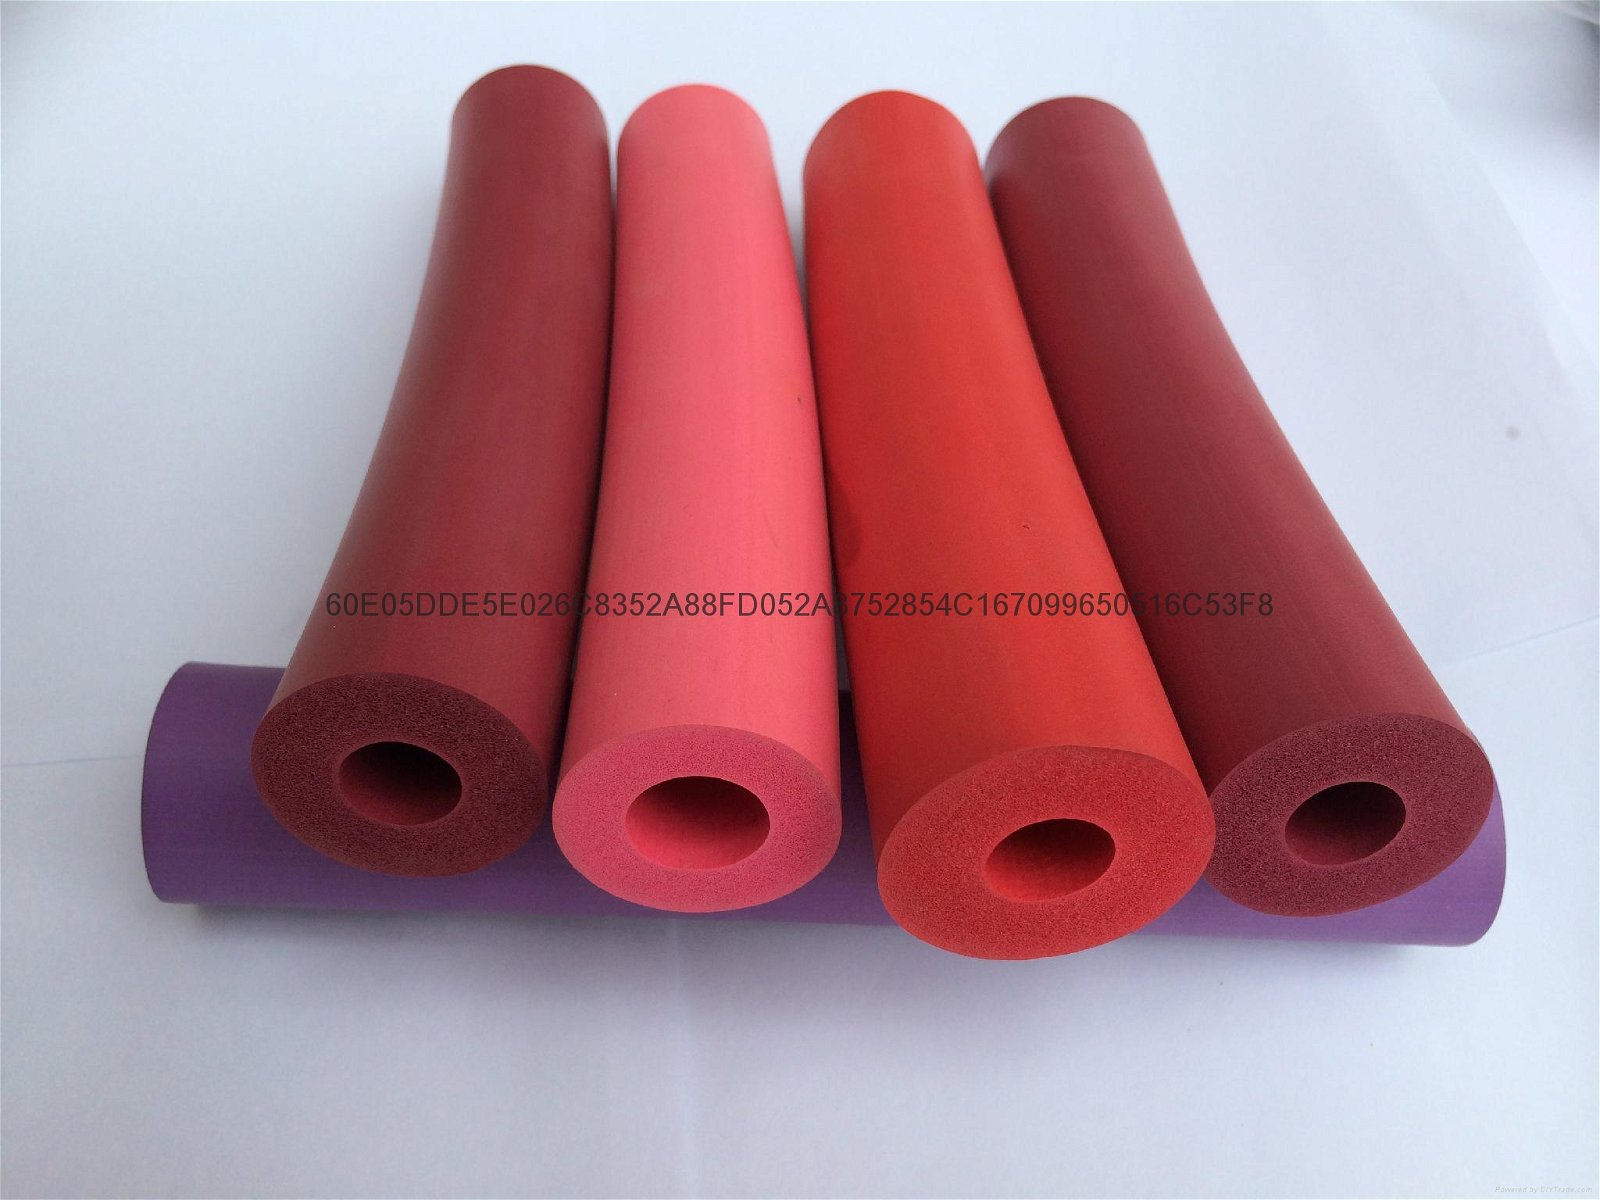 Rubber foam tubes, rubber foam protective grips 4